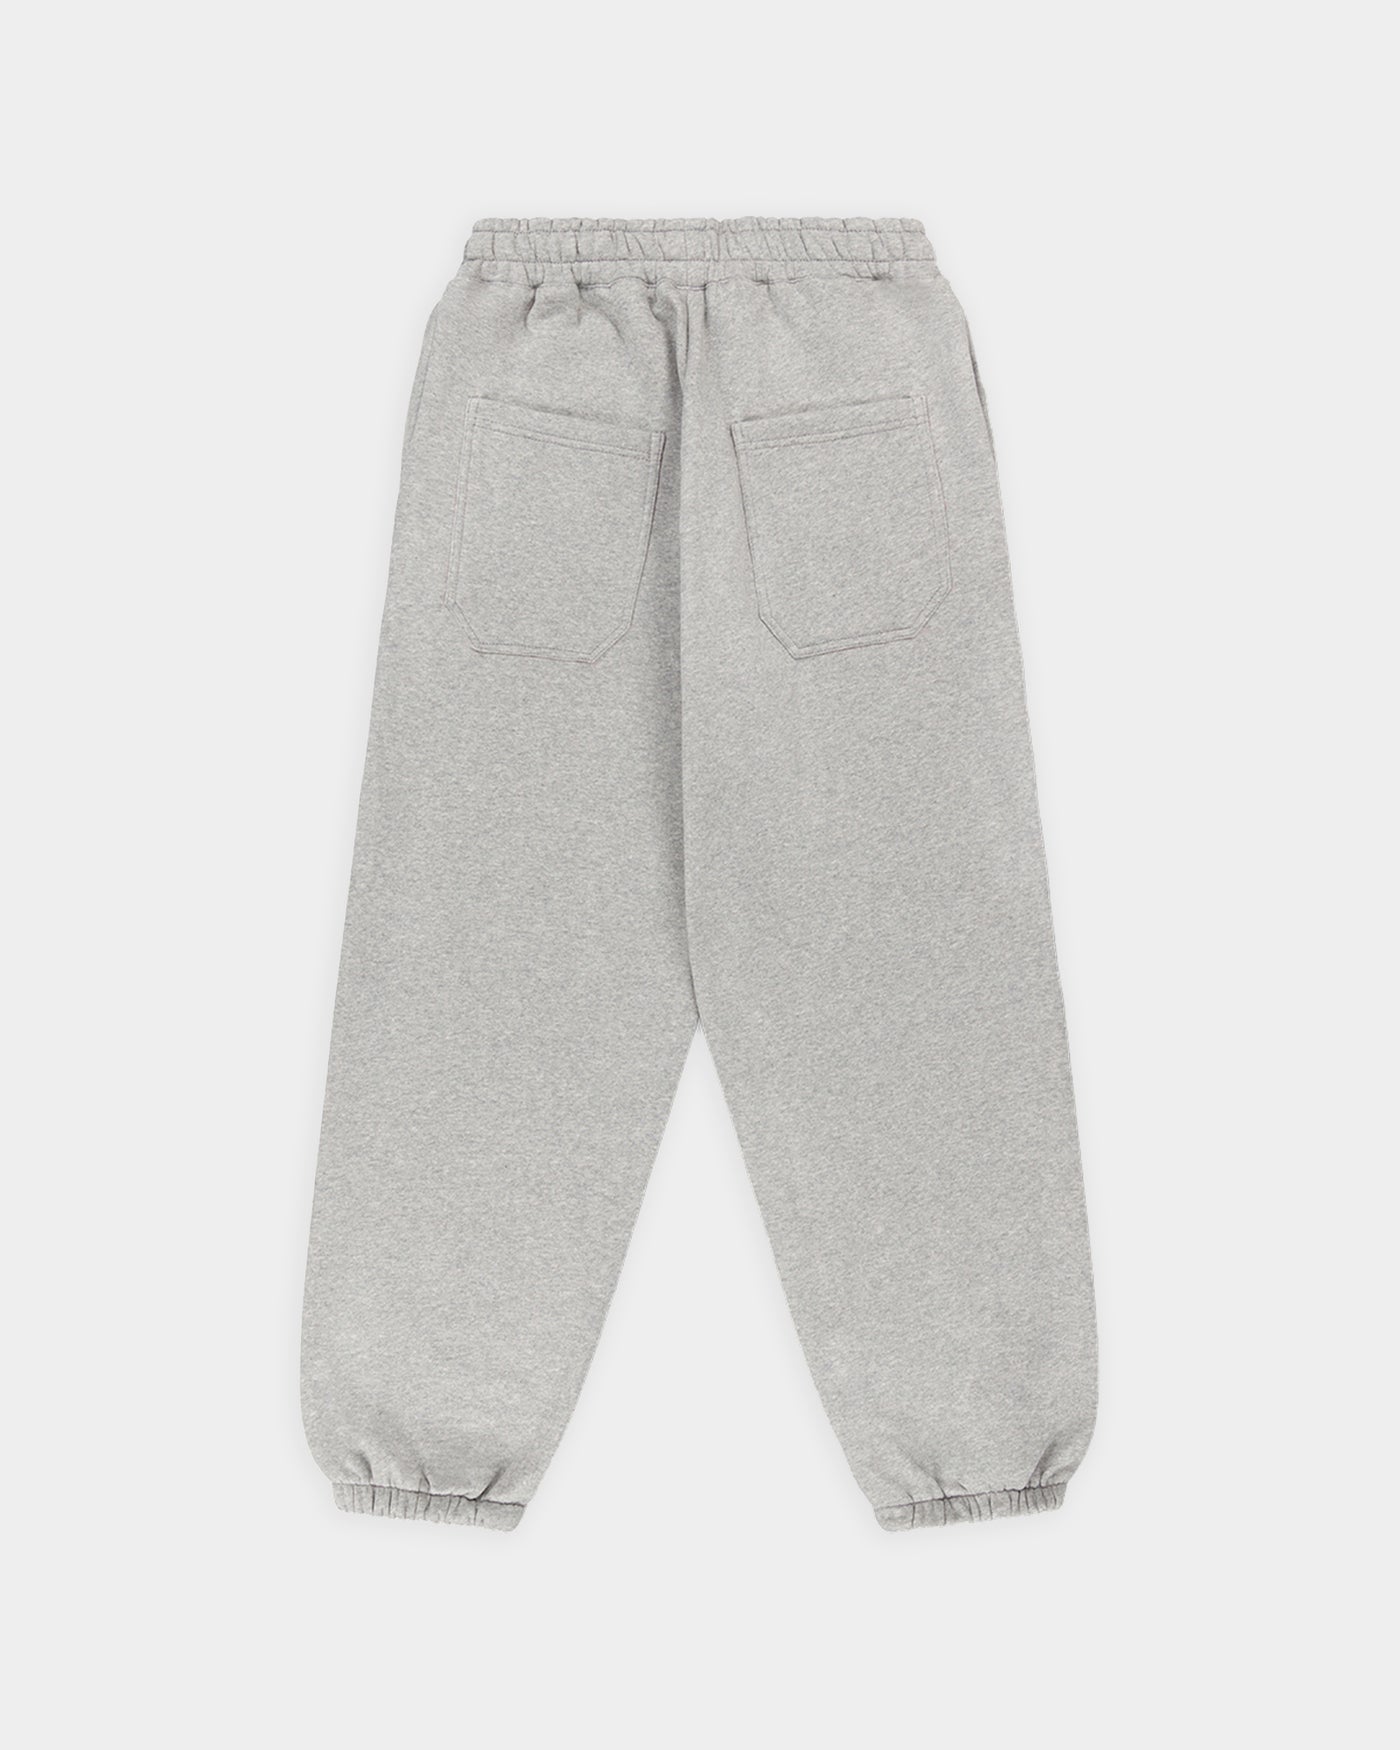 Ultra Baggy Sweatpants - Athletic Grey – RITZY